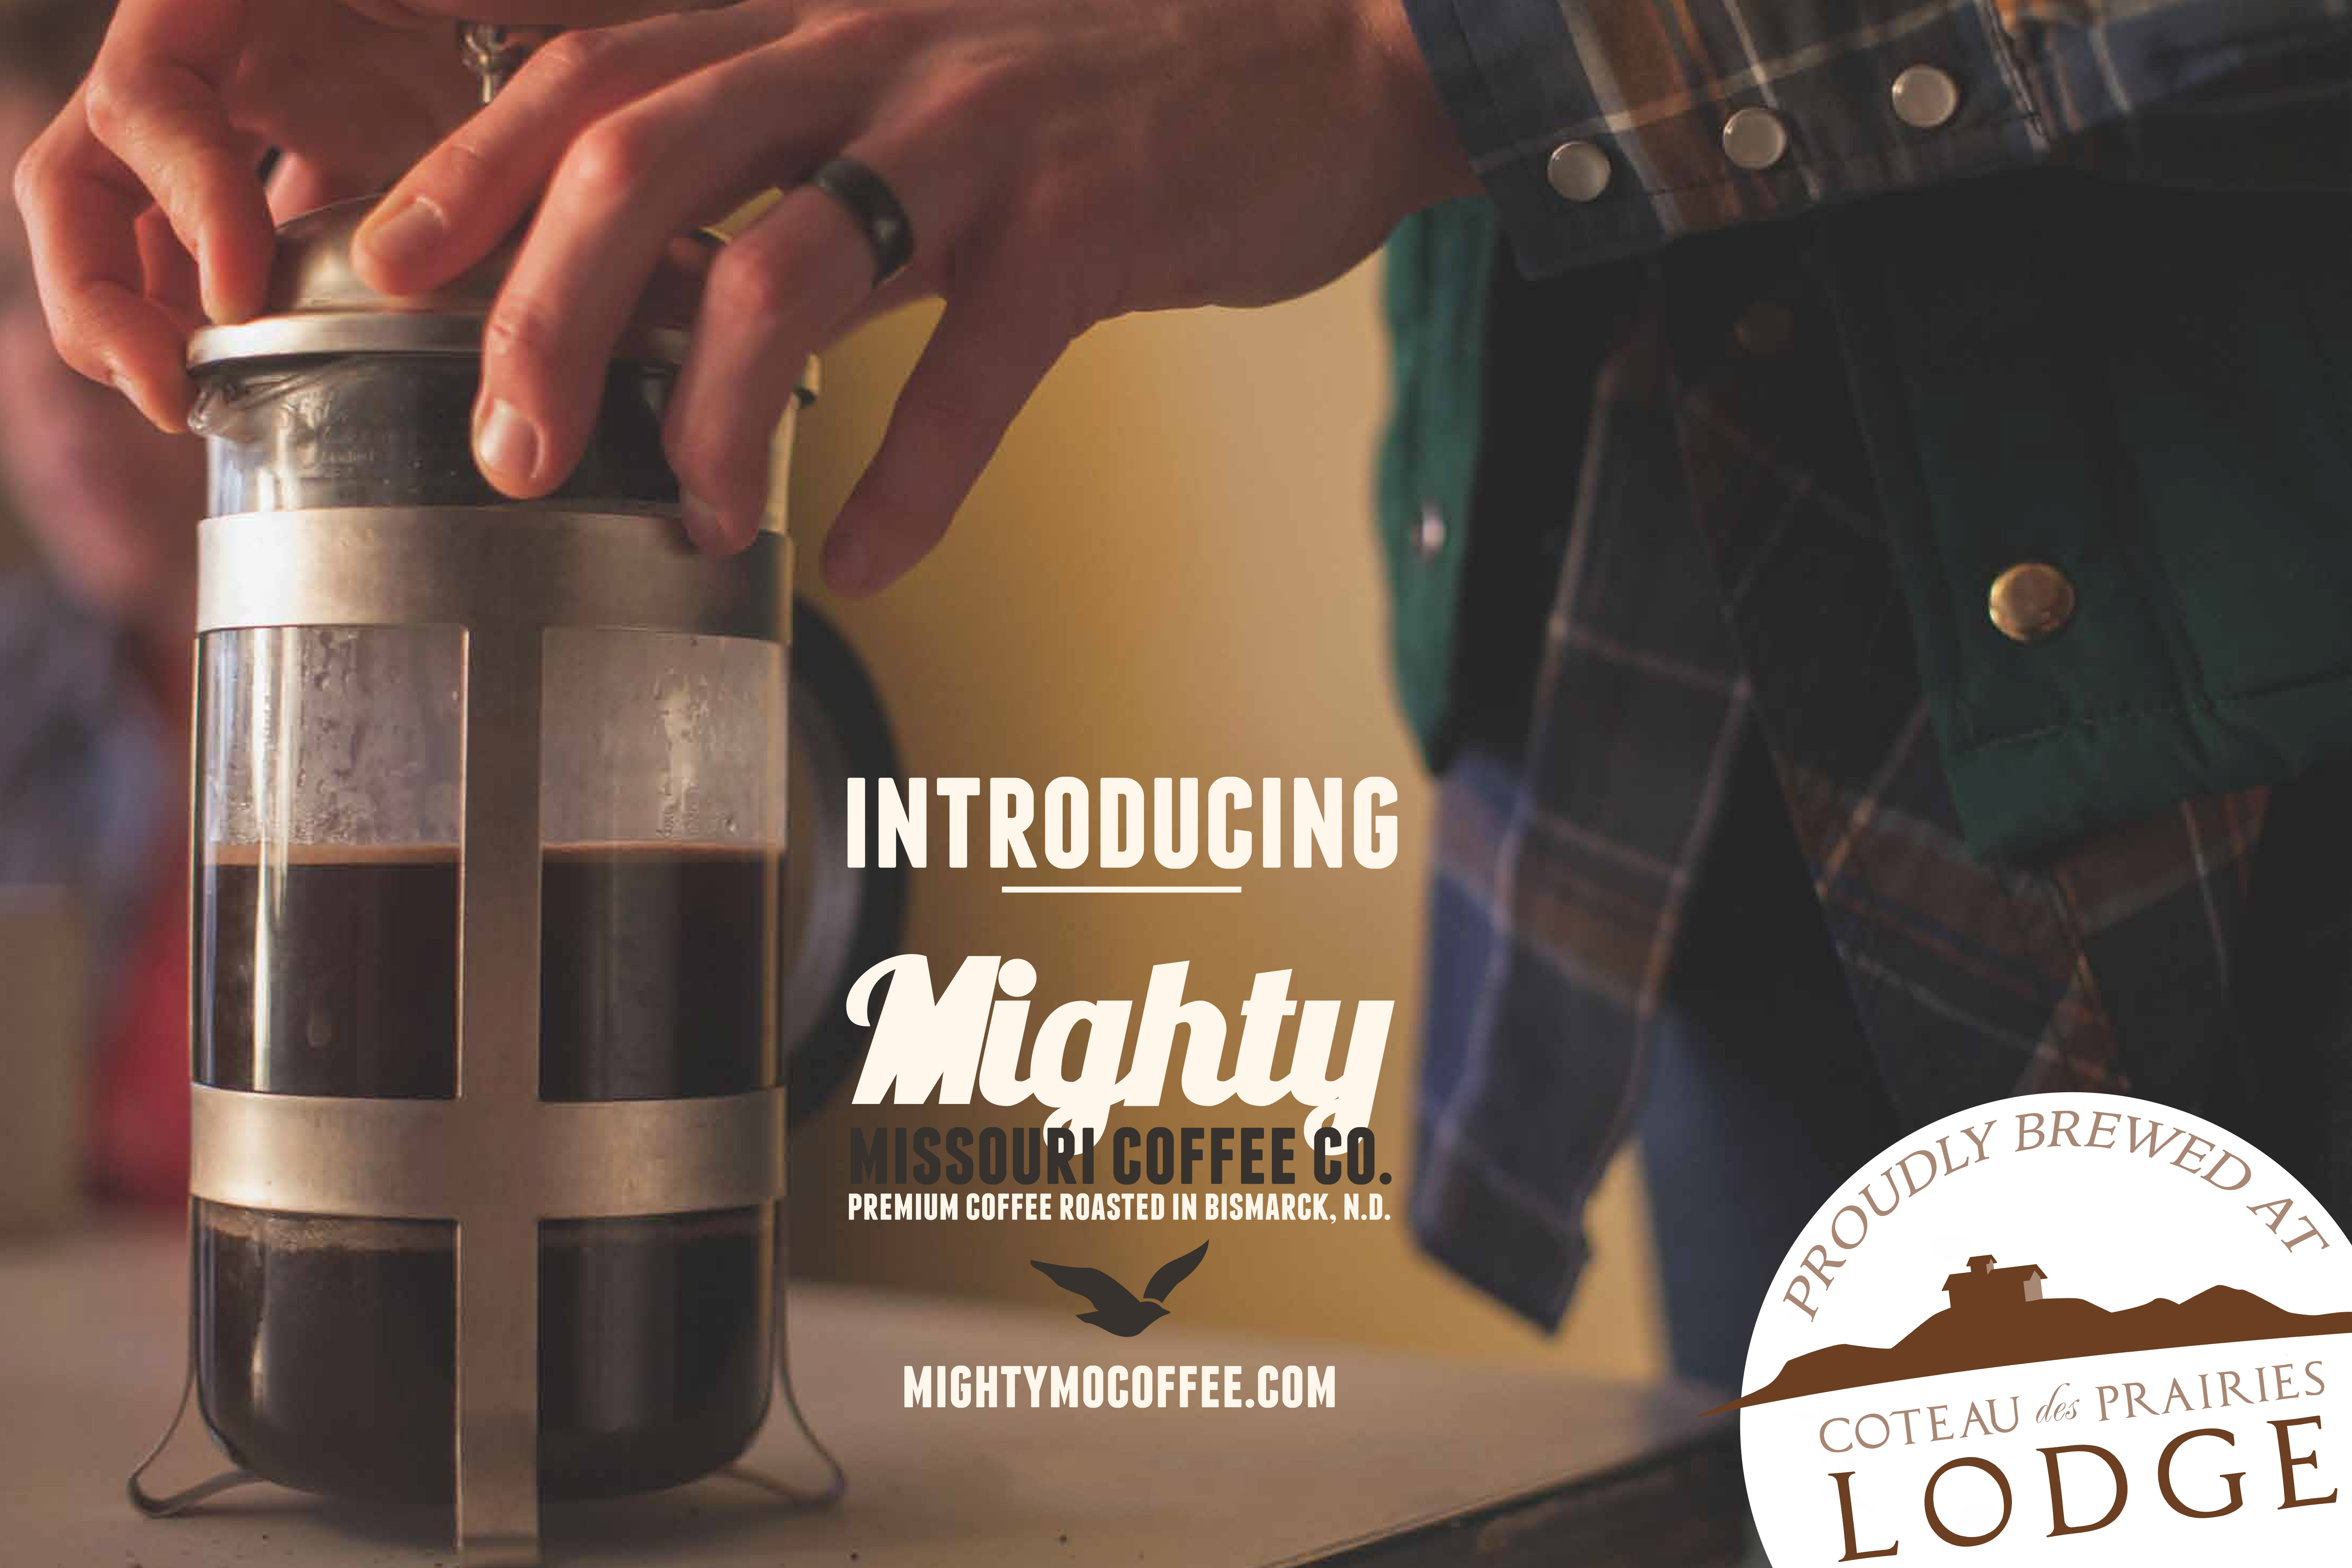 Mighty Missouri Coffee Company at Coteau des Prairies Lodge